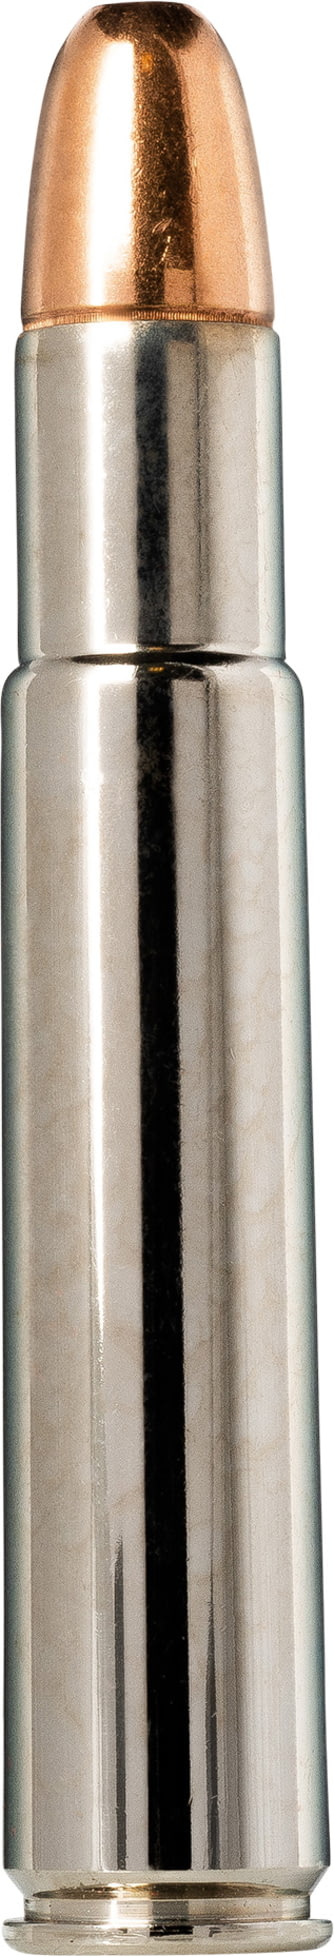 Norma African PH Ammunition .505 Magnum Gibbs 600 Grain PPSN Brass Cased Centerfire Rifle Ammunition